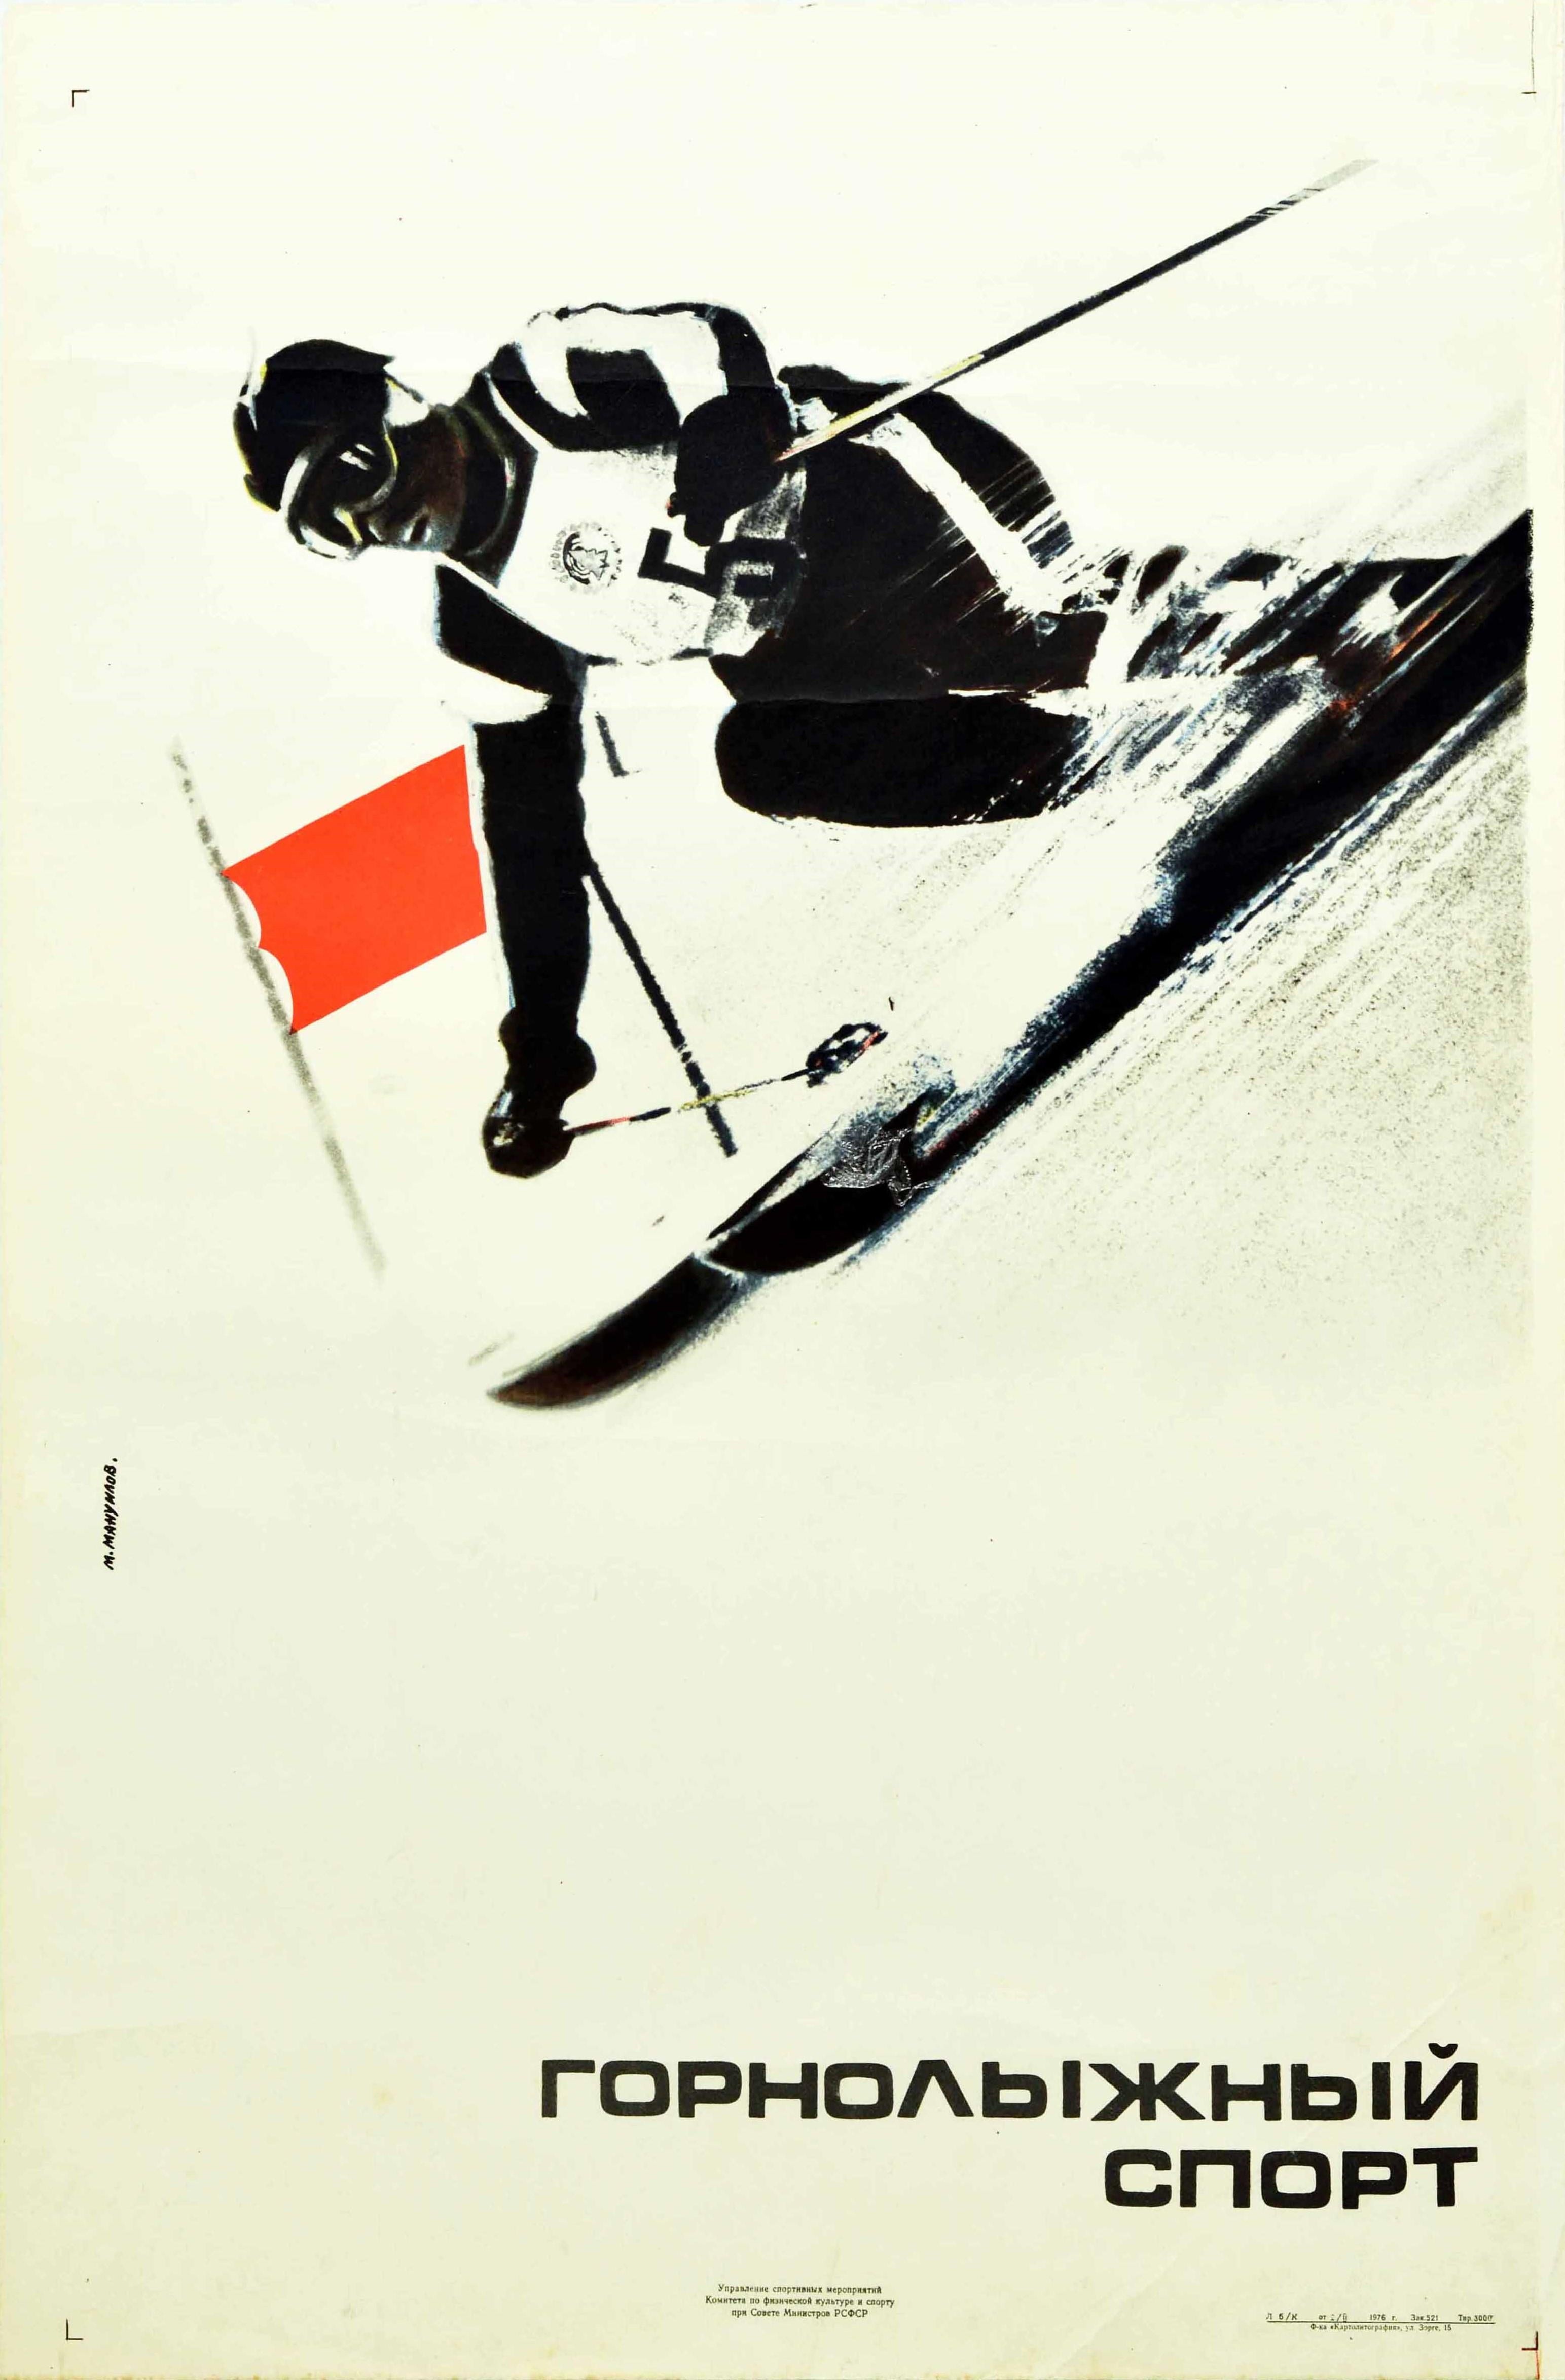 M Manuilov Print - Original Vintage Soviet Winter Sport Poster Downhill Skiing USSR Skier Design